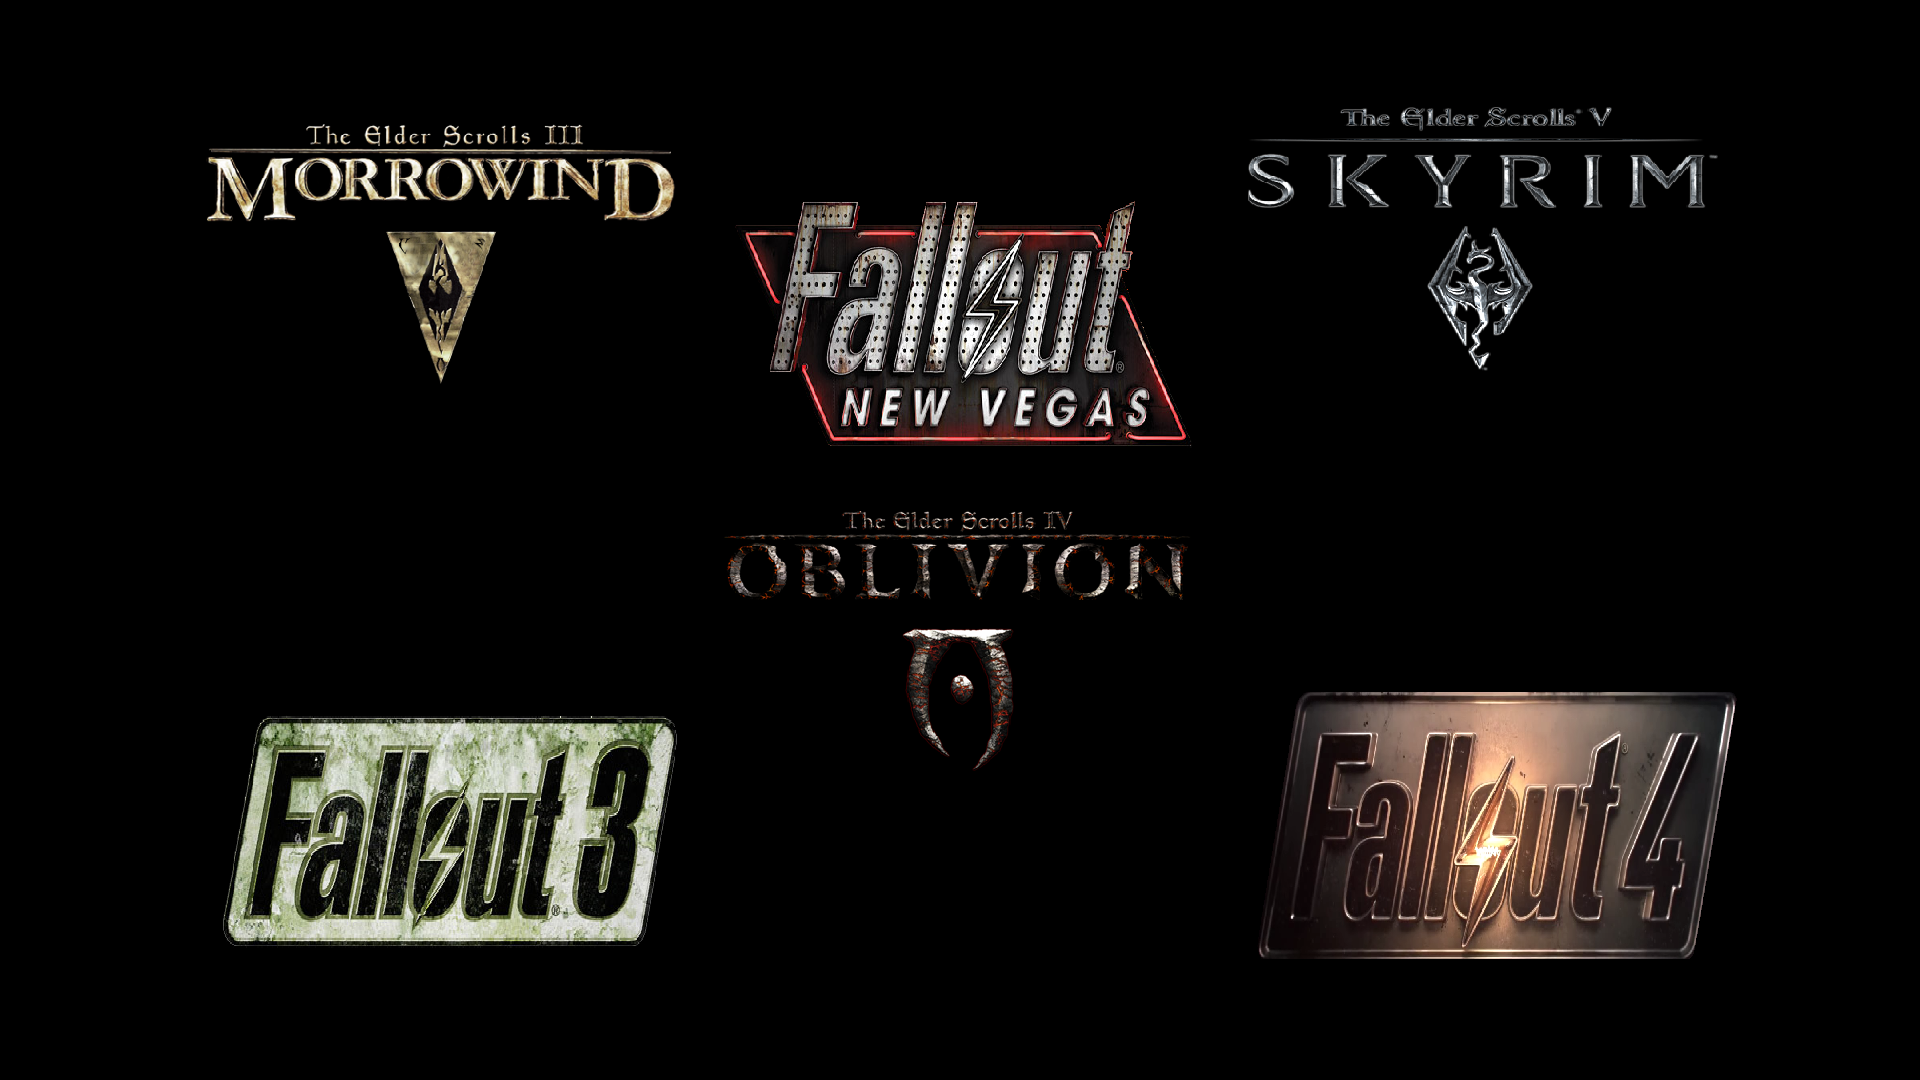 The Elder Scrolls The Elder Scrolls Iii Morrowind Skyrim Fallout 3 Fallout New Vegas Fallout 4 The E 1920x1080